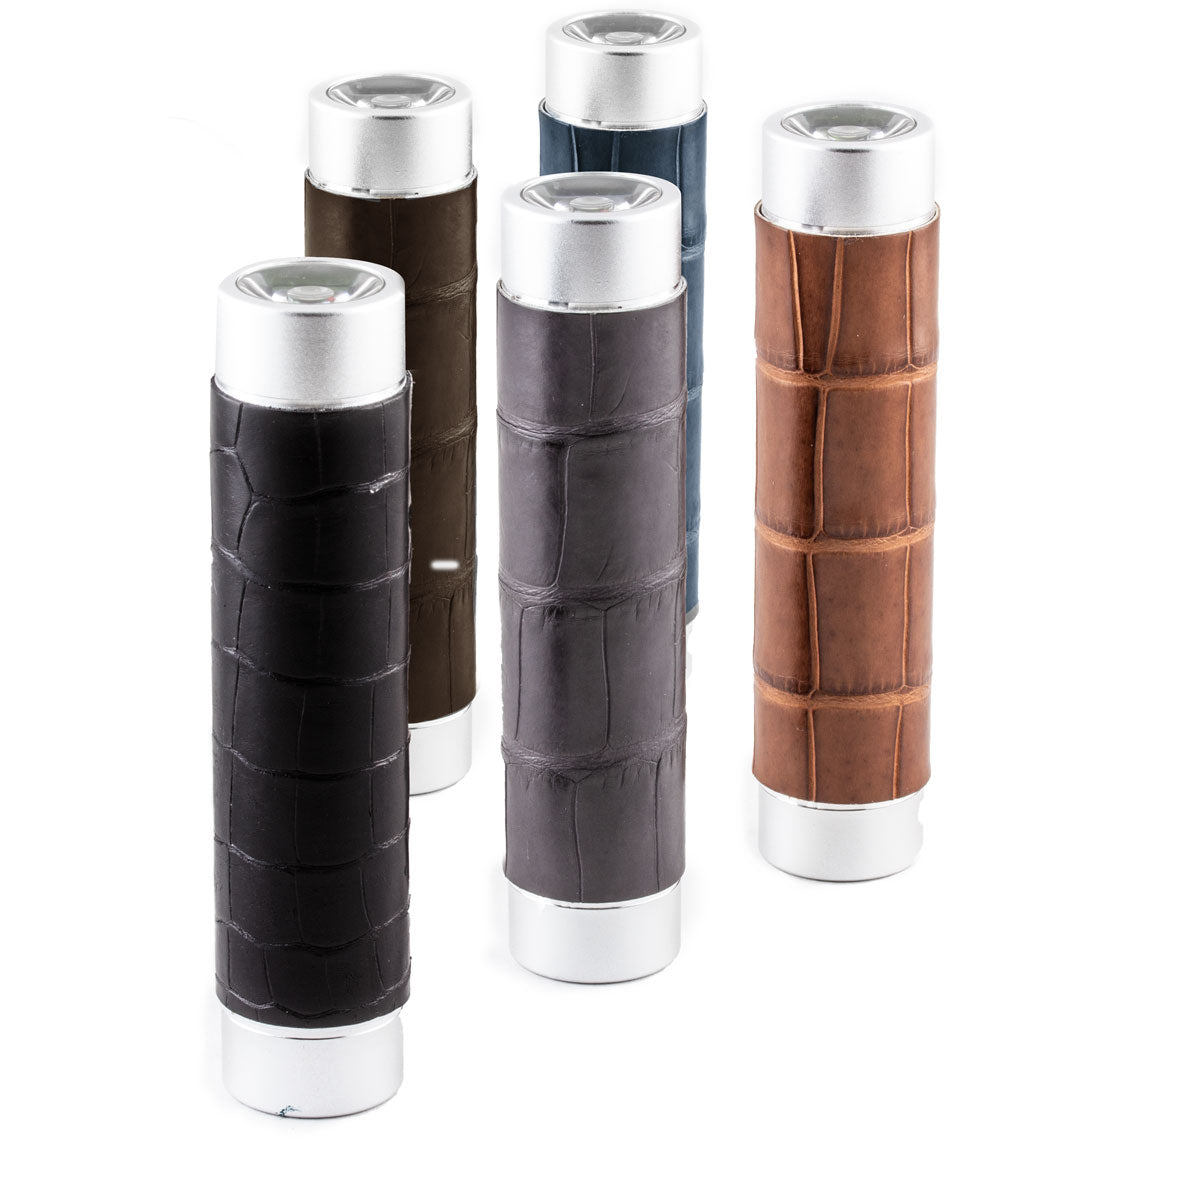 Mini external battery & flashlights - Alligator - Universal charger iPhone, Samsung, smartphone, tablet ... (black, brown, gray)